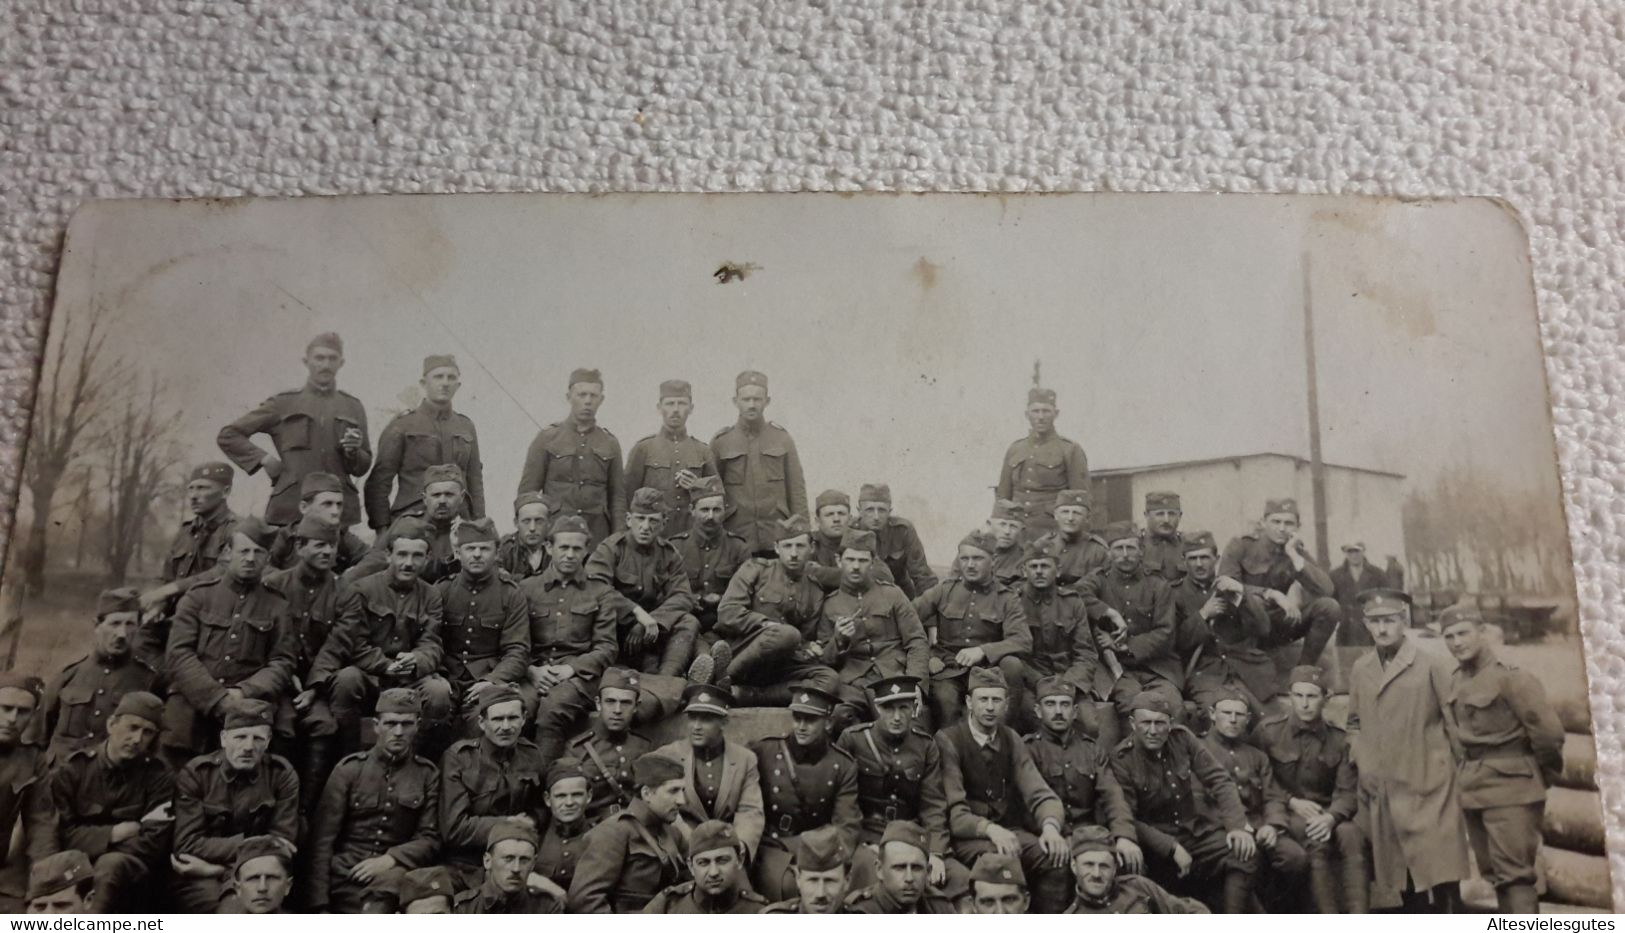 Postkarte Fotokarte Foto Gruppenfoto Soldaten Portrait 1 WK Militär Uniformen - 1914-18